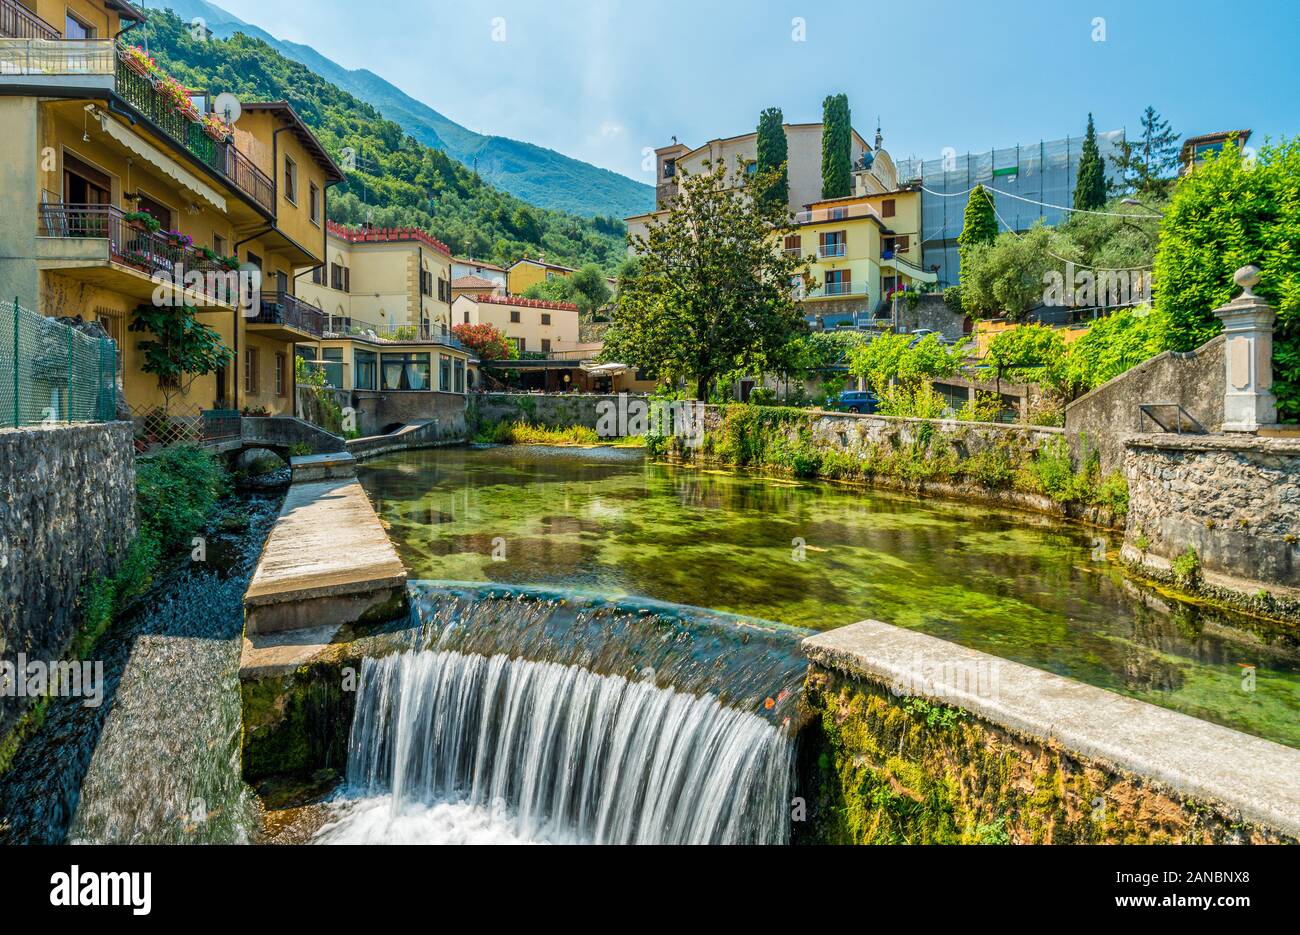 Idyllischer Blick in Cassone di malcesine, schönen Dorf am Gardasee. Venetien, in der Provinz Verona, Italien. Stockfoto